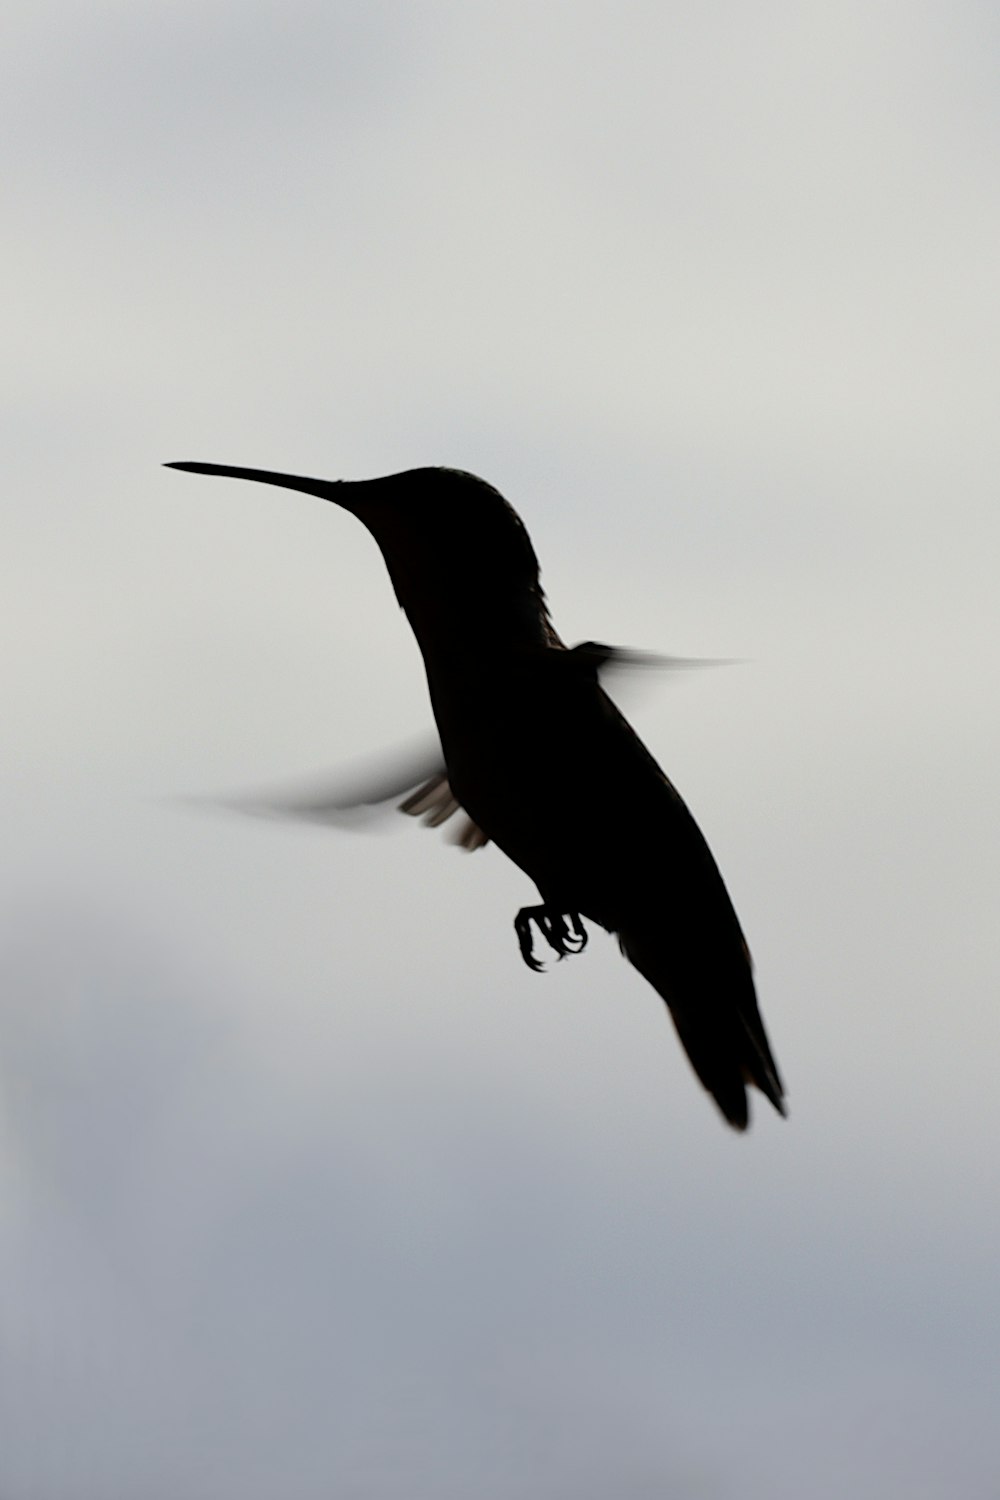 black humming bird flying in mid air